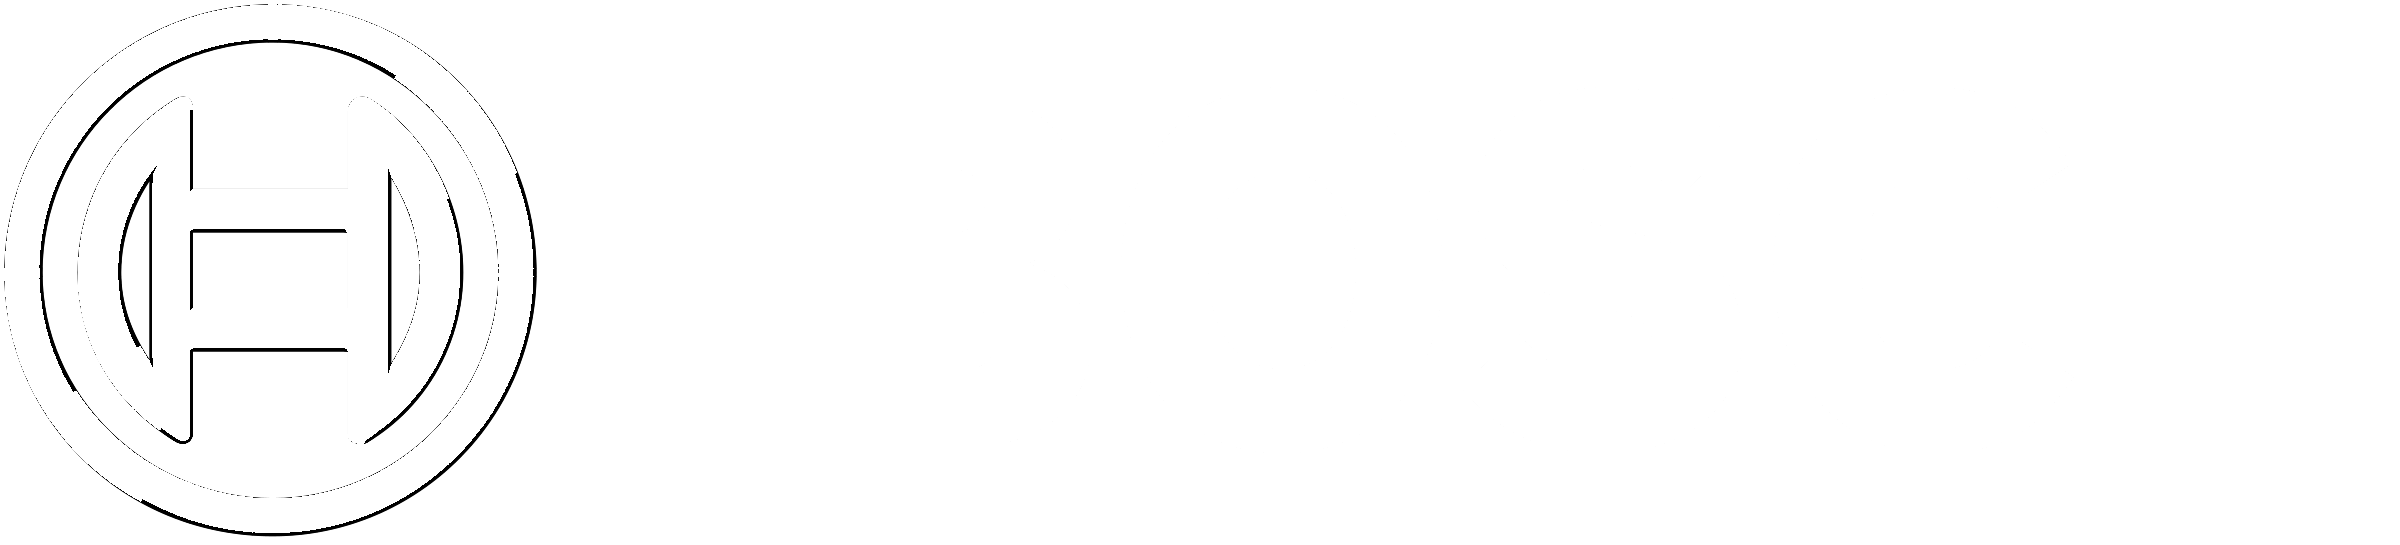 bosch-logo-black-and-white